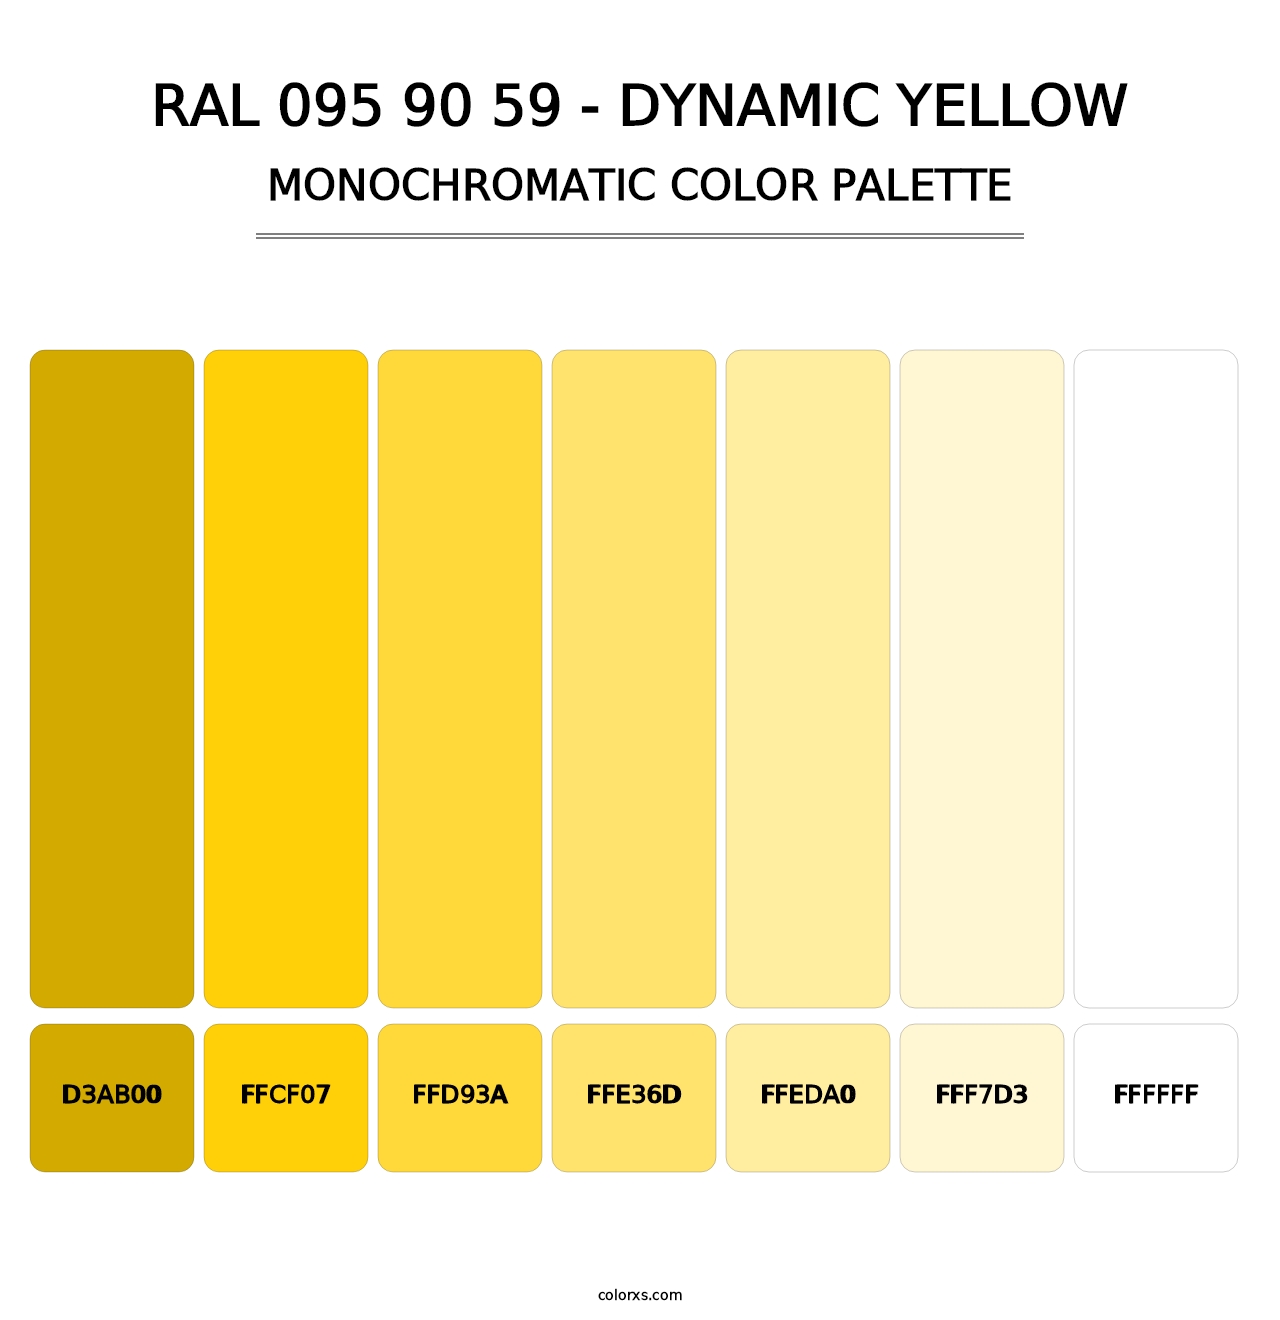 RAL 095 90 59 - Dynamic Yellow - Monochromatic Color Palette